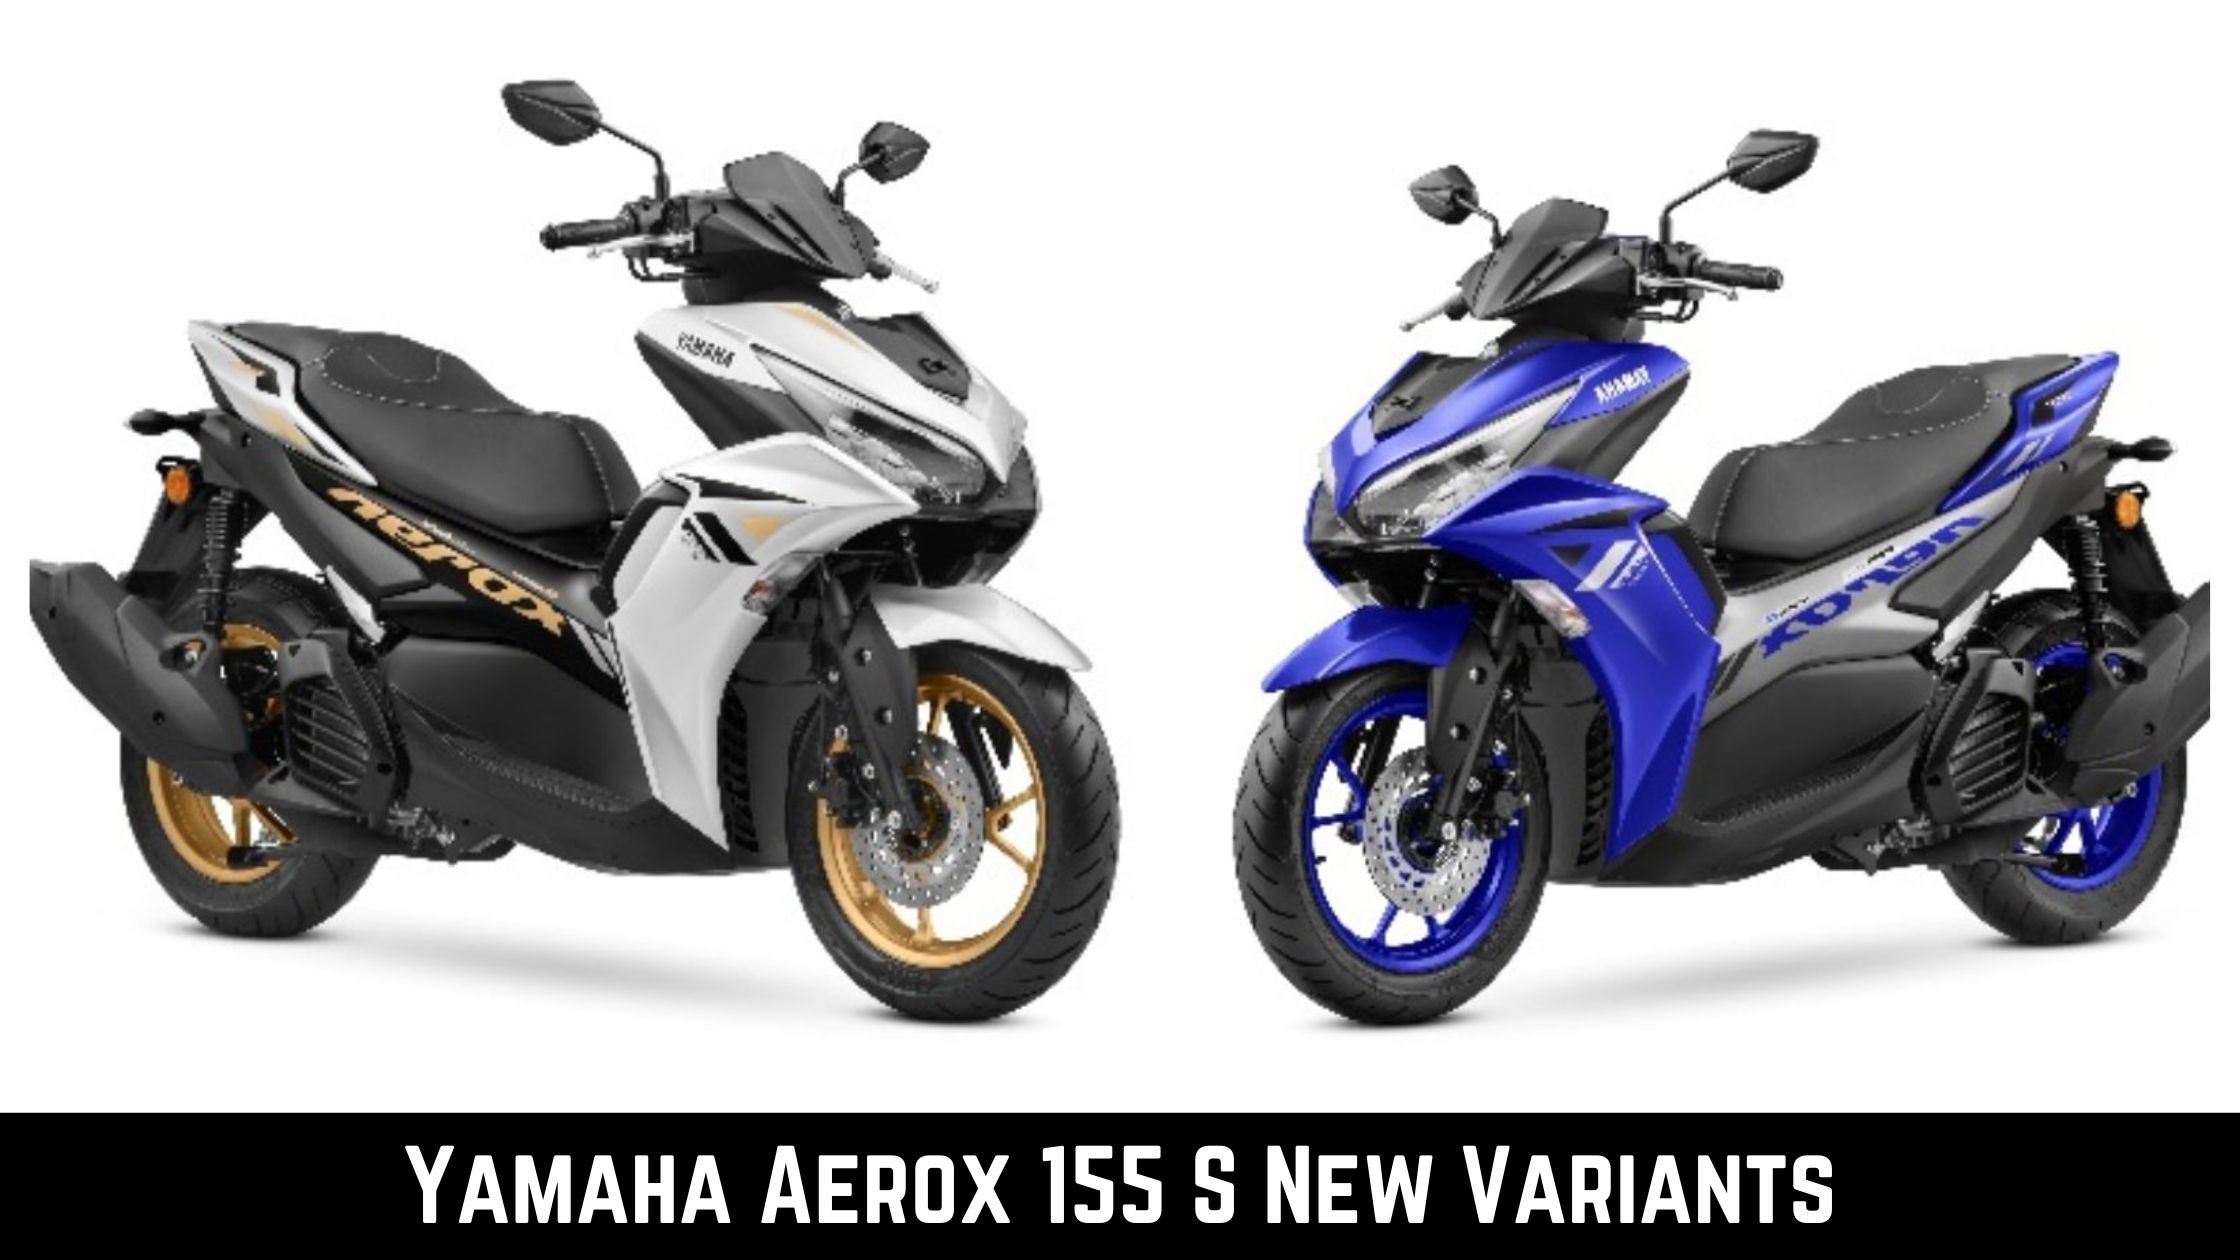 Yamaha Aerox 155 S New Variants with Smart Key